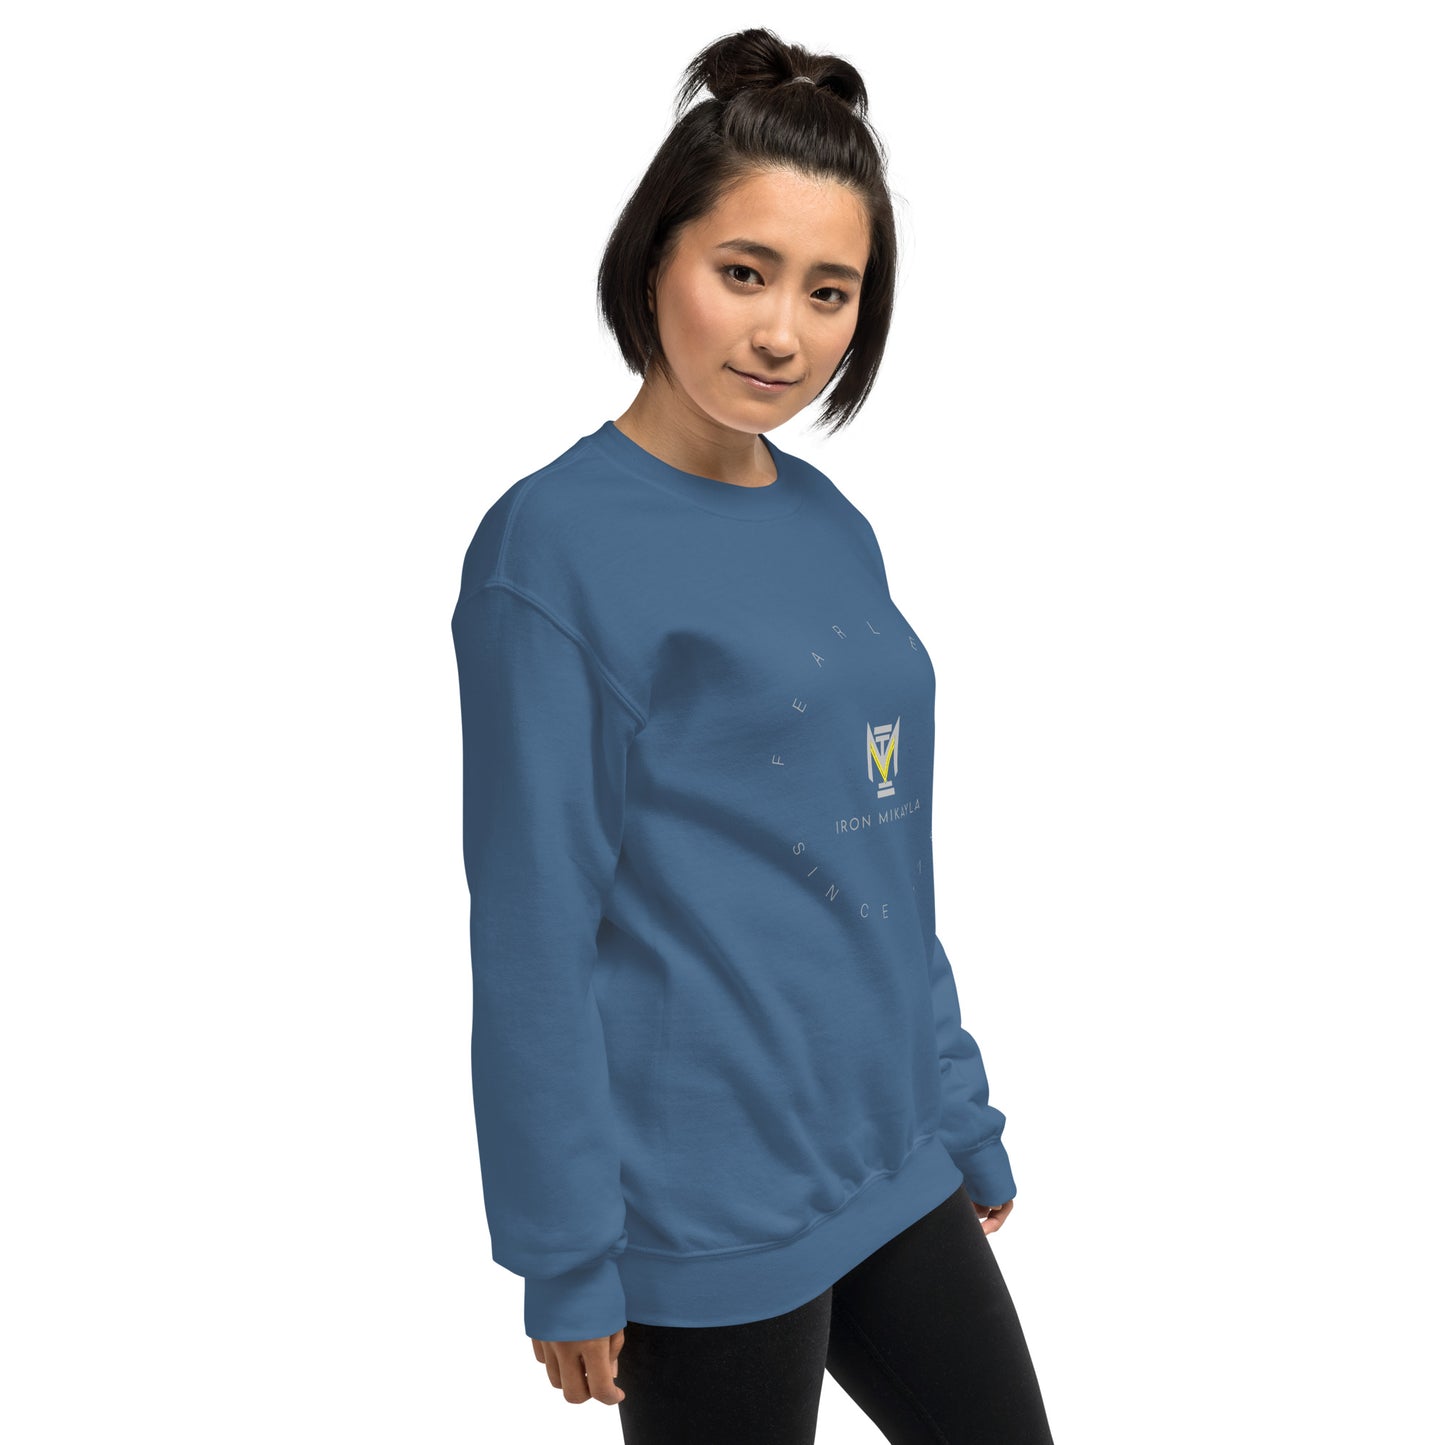 Iron Mikayla™ Fearless Sweatshirt